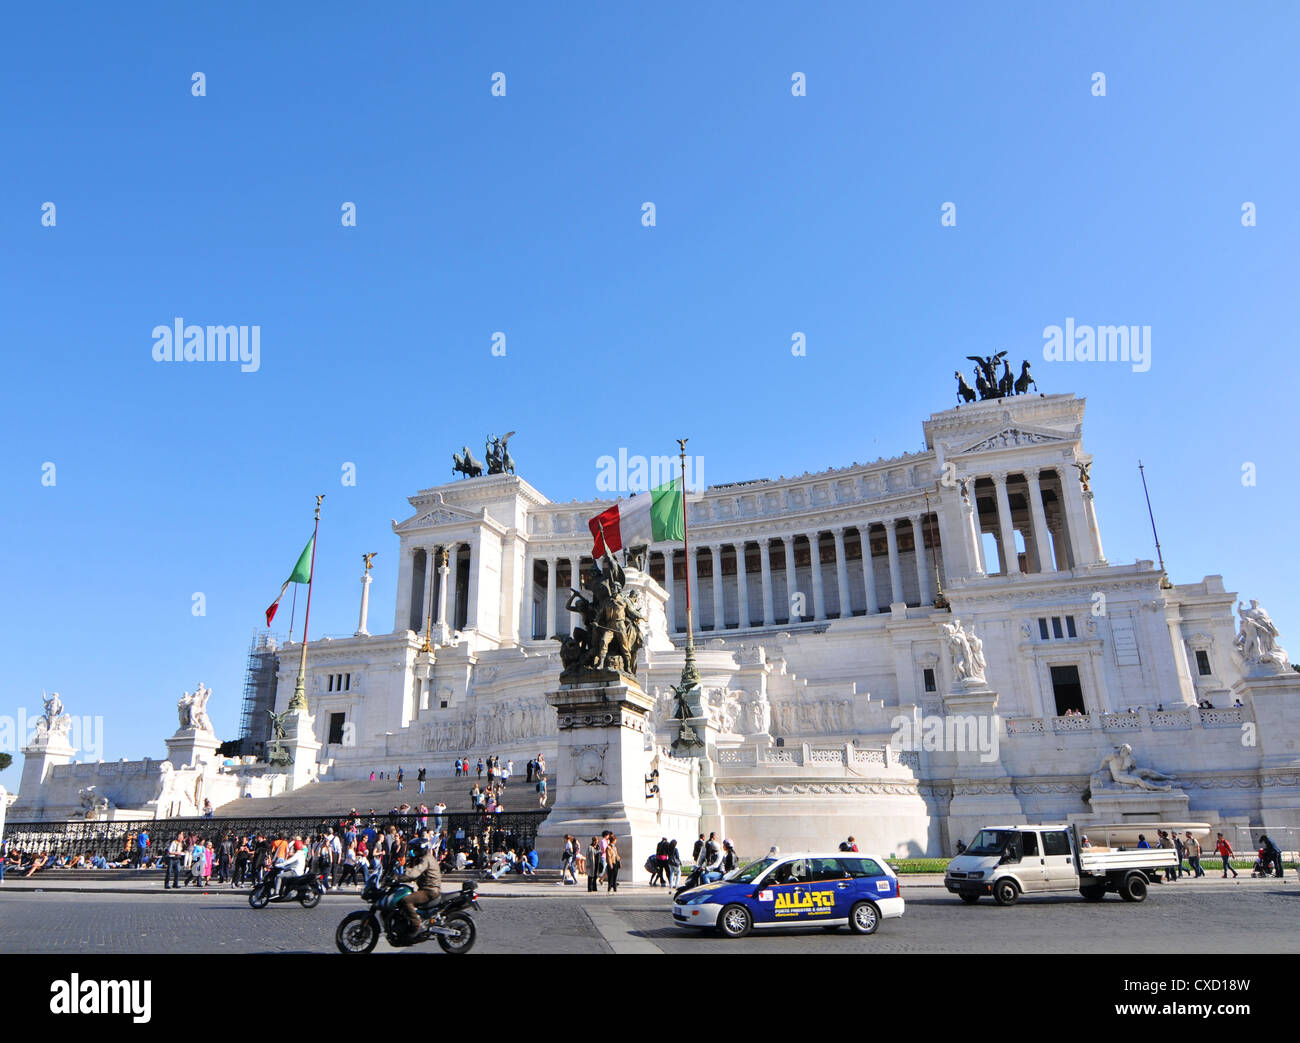 Rome, Italy - 30 March, 2012: Tourists visiting Piazza Venezia, major square and touristic attraction in central Rome Stock Photo